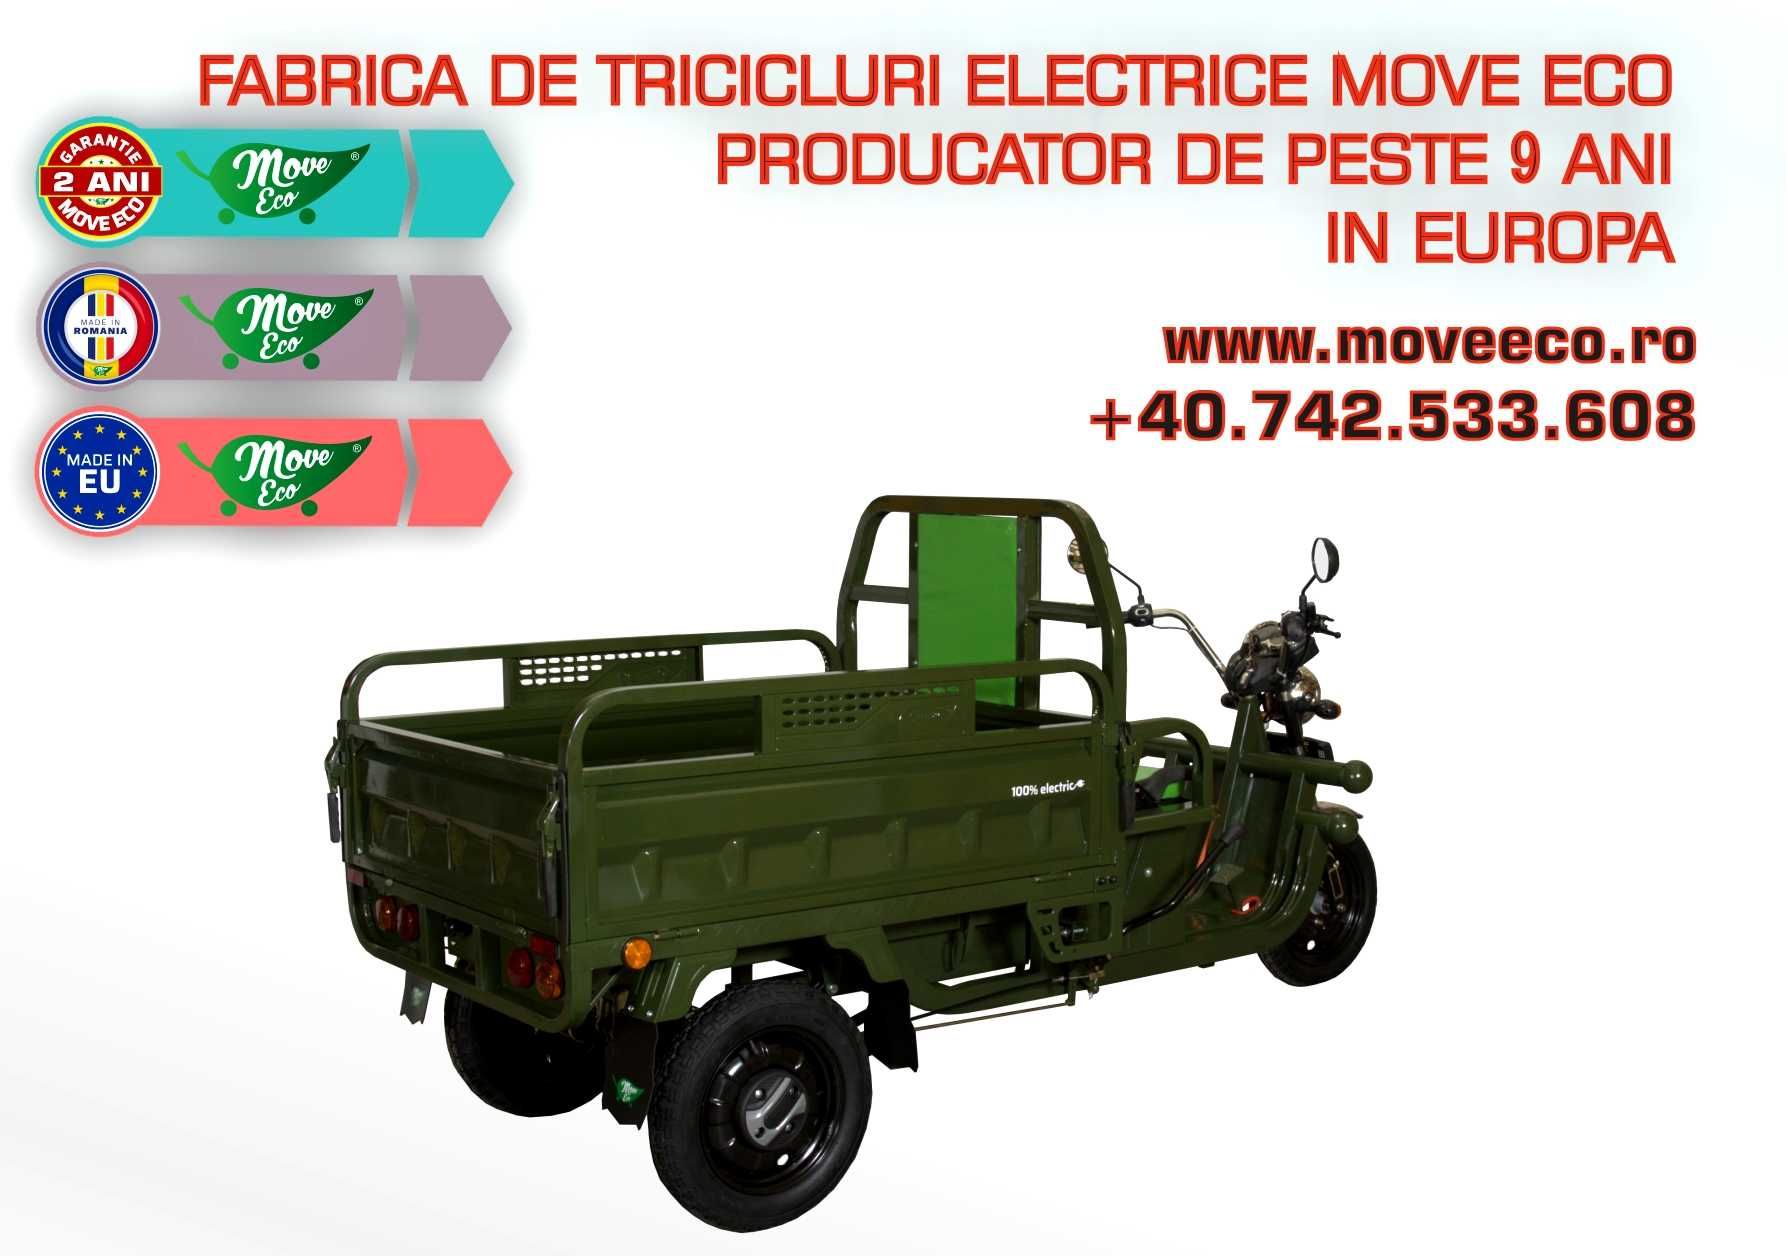 Triciclu electric Omologat fabricat la MoveEco Romania